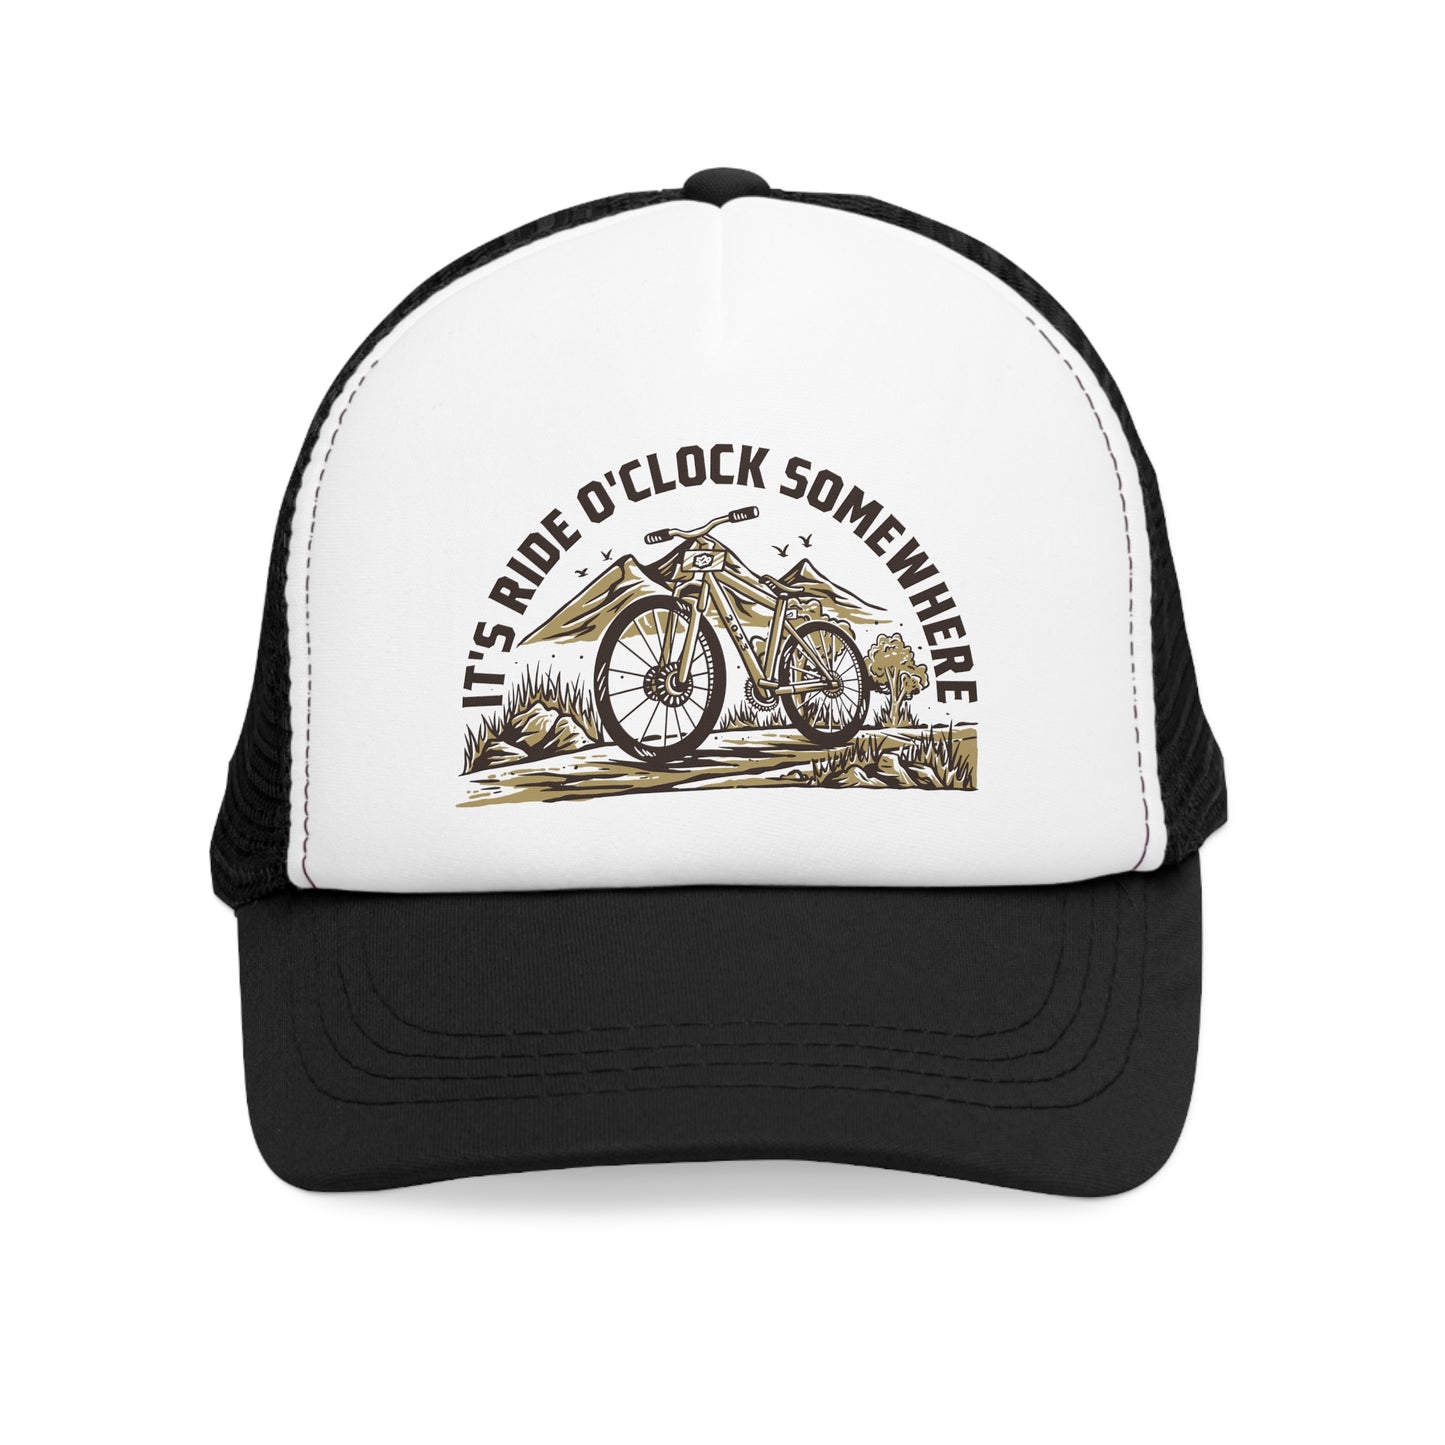 2023 529 Garage Limited Edition "It's ride o'clock somewhere" Trucker Cap